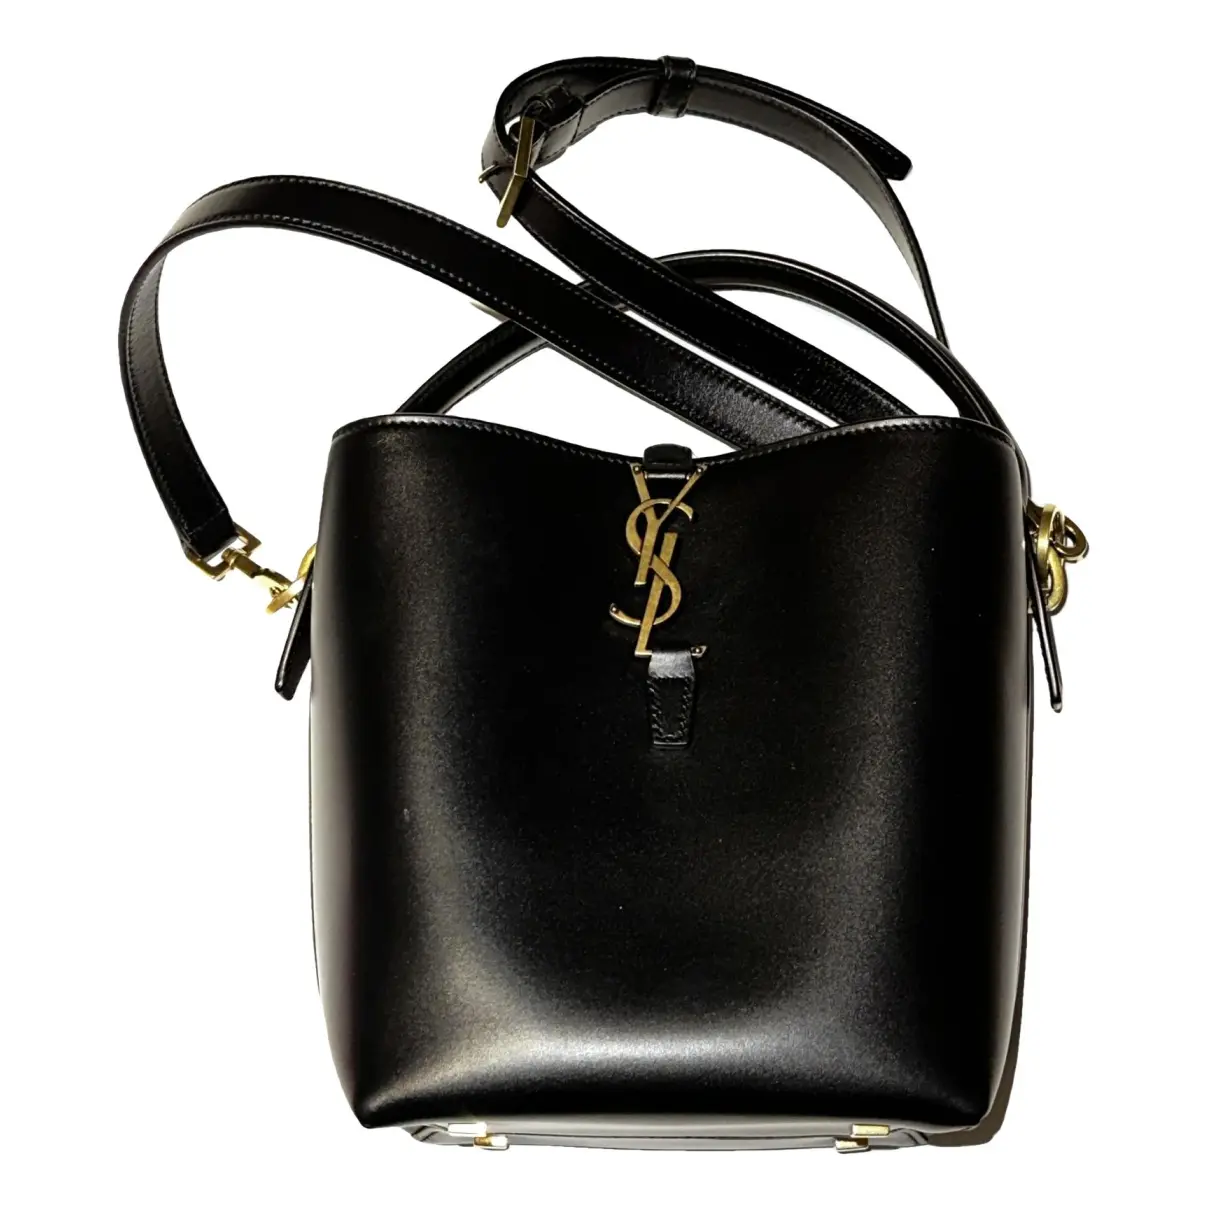 Monogram bucket leather handbag